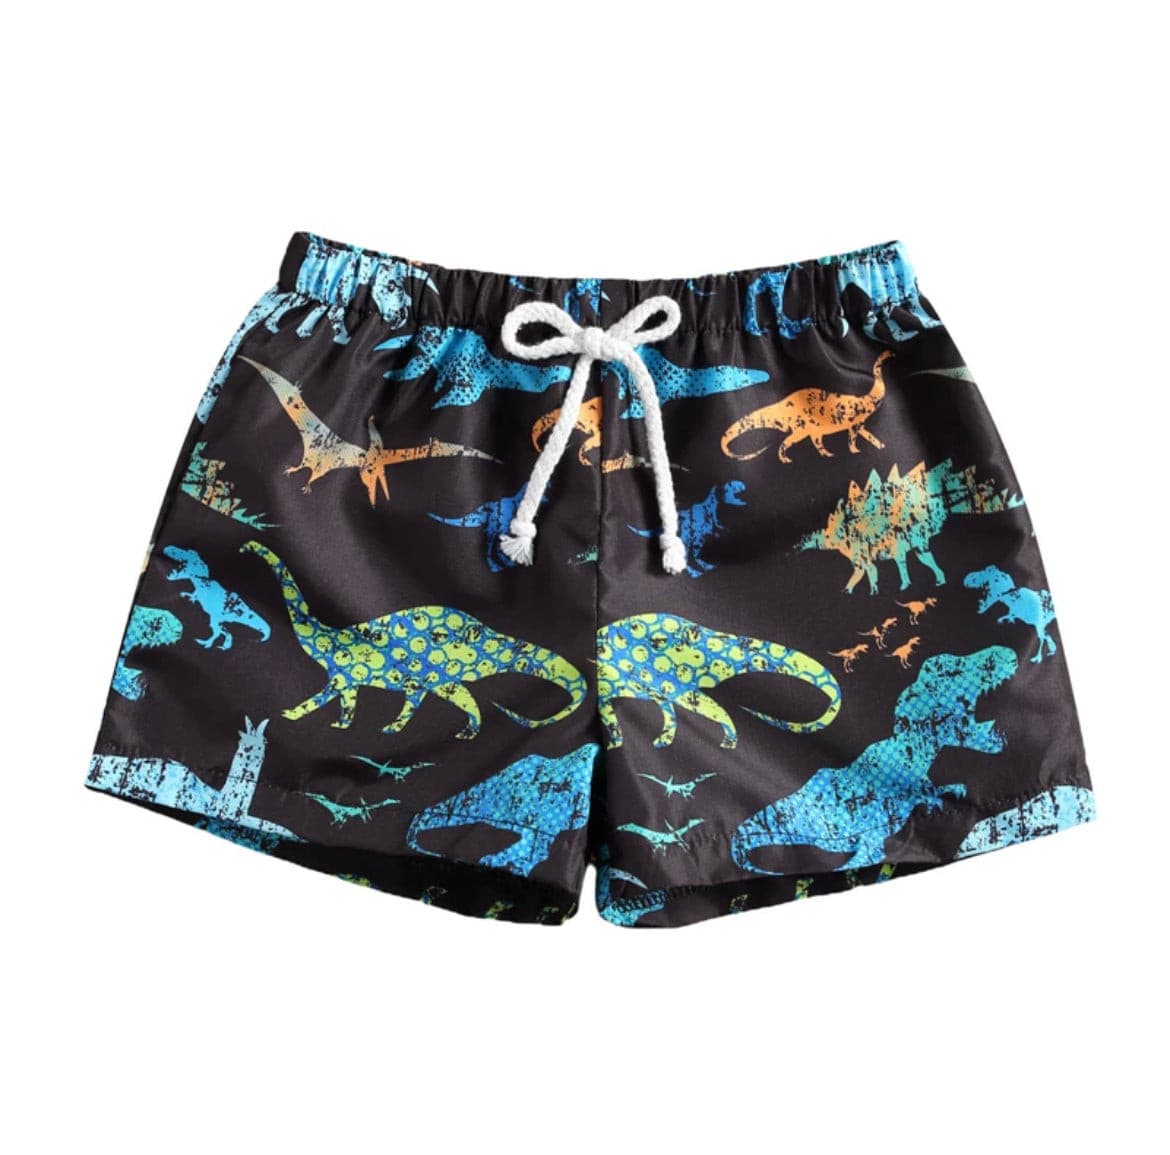 Dinosaur Beach Shorts / Boardies.